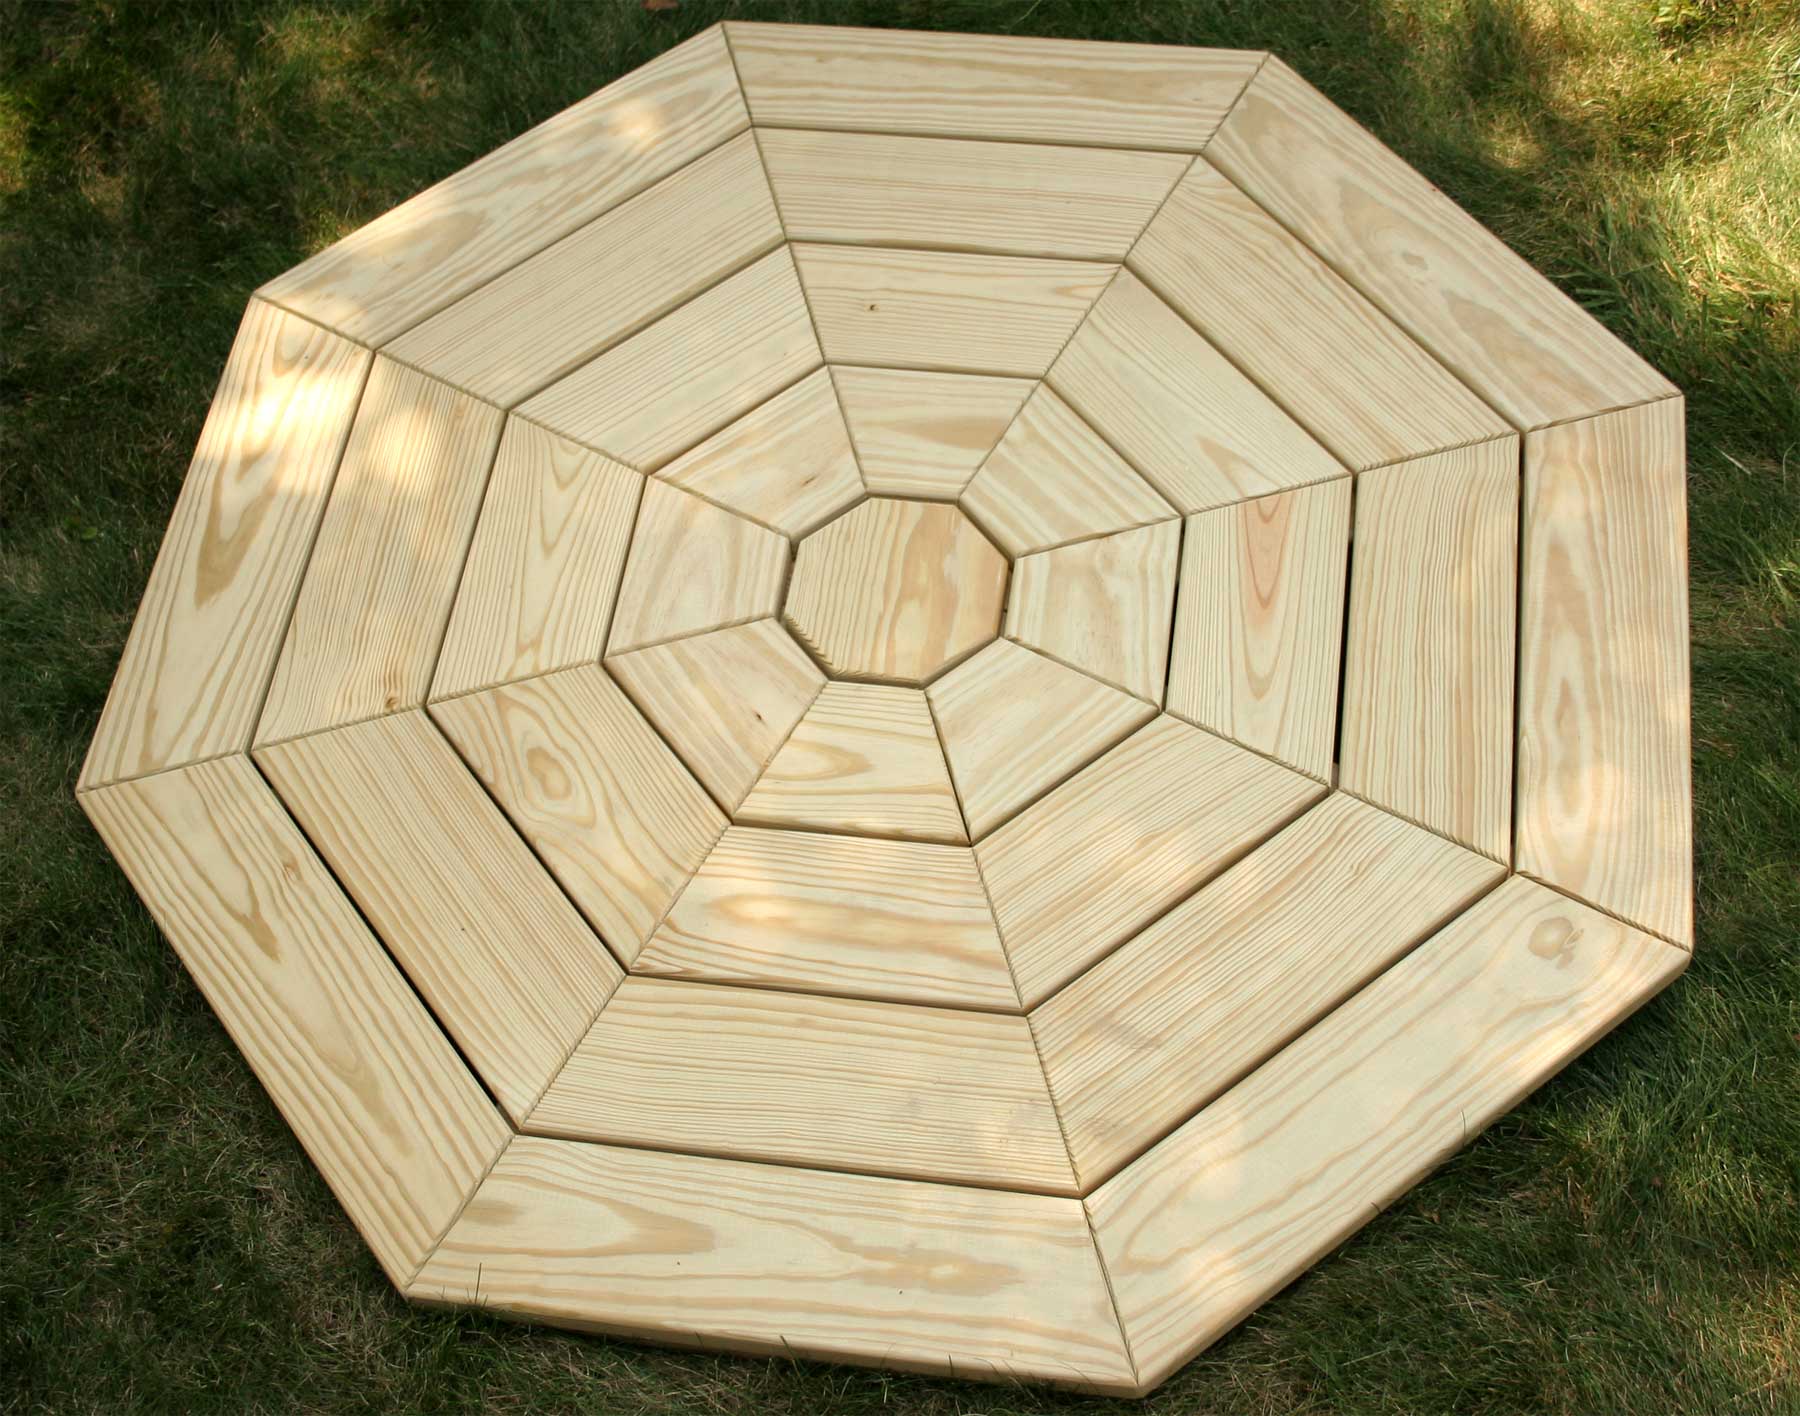 Choice Hexagon picnic table plans with umbrella hole ~ dadi wood